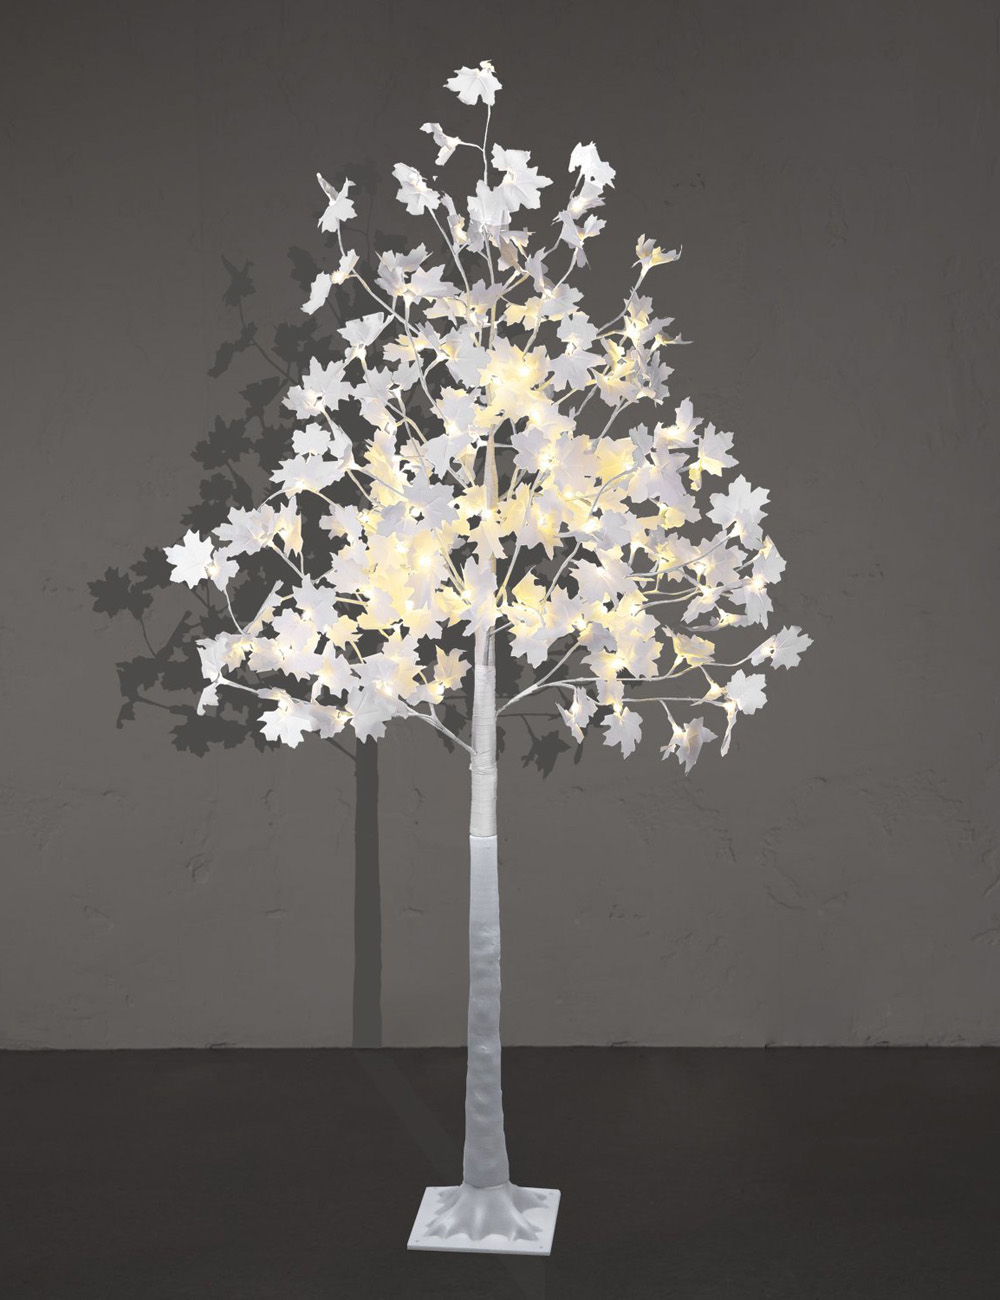 LIGHTSHARE 6 ft. Maple Tree - 120 LED Lights, Warm White, Cold White Lights and Mixed Lights Color, White Finish